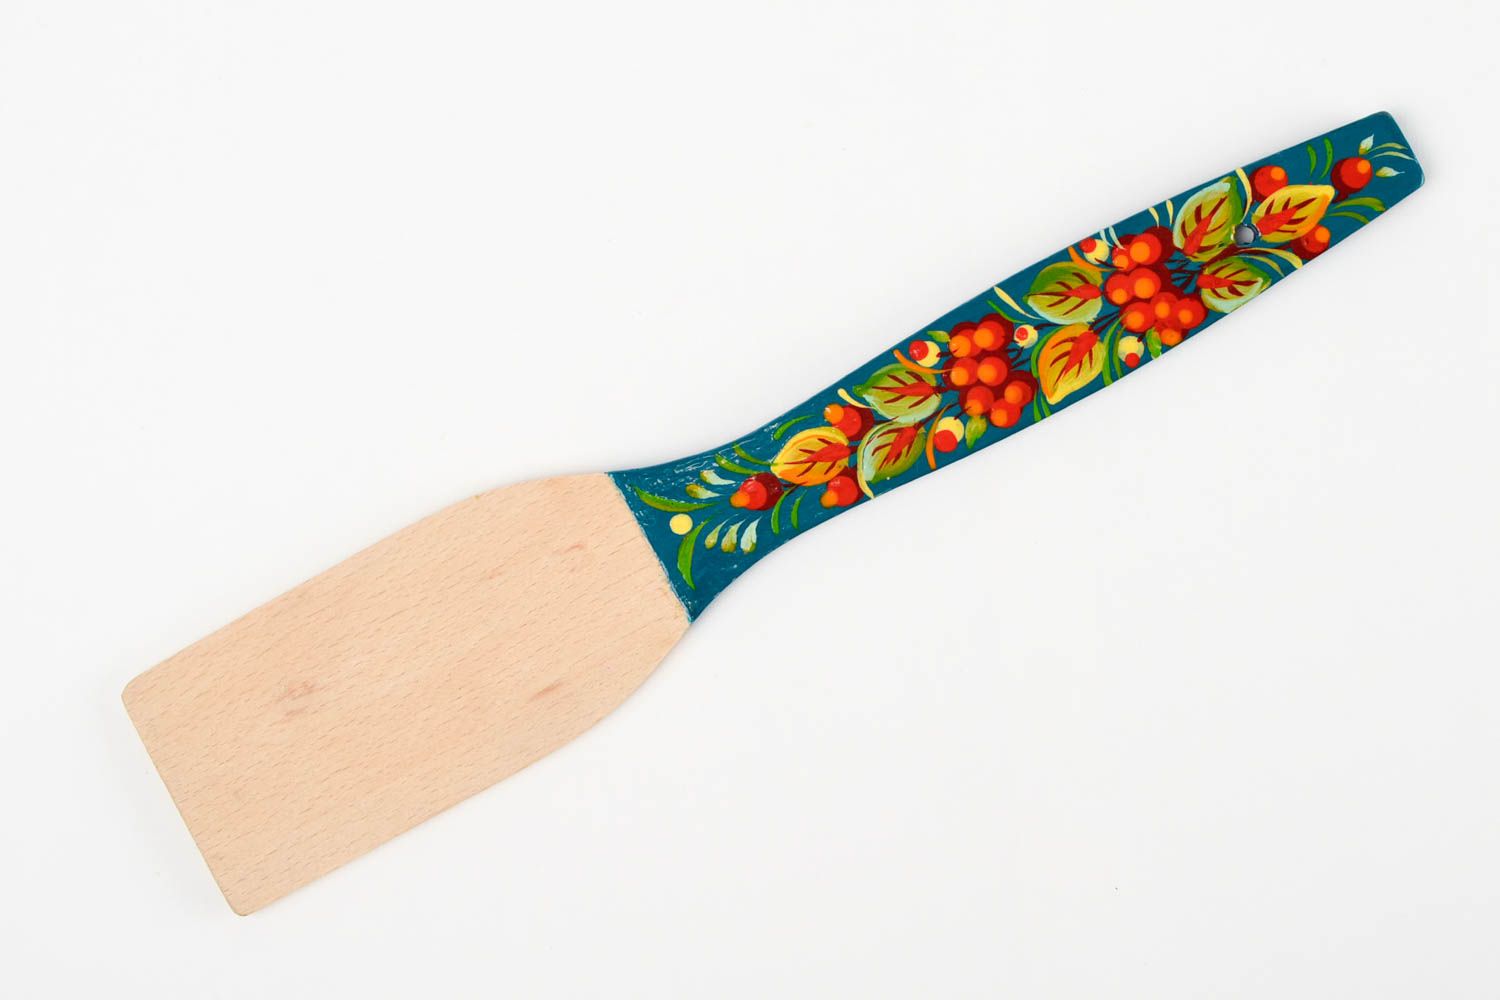 Handmade spatula designer litchen utensils decor ideas wooden spatula  photo 3